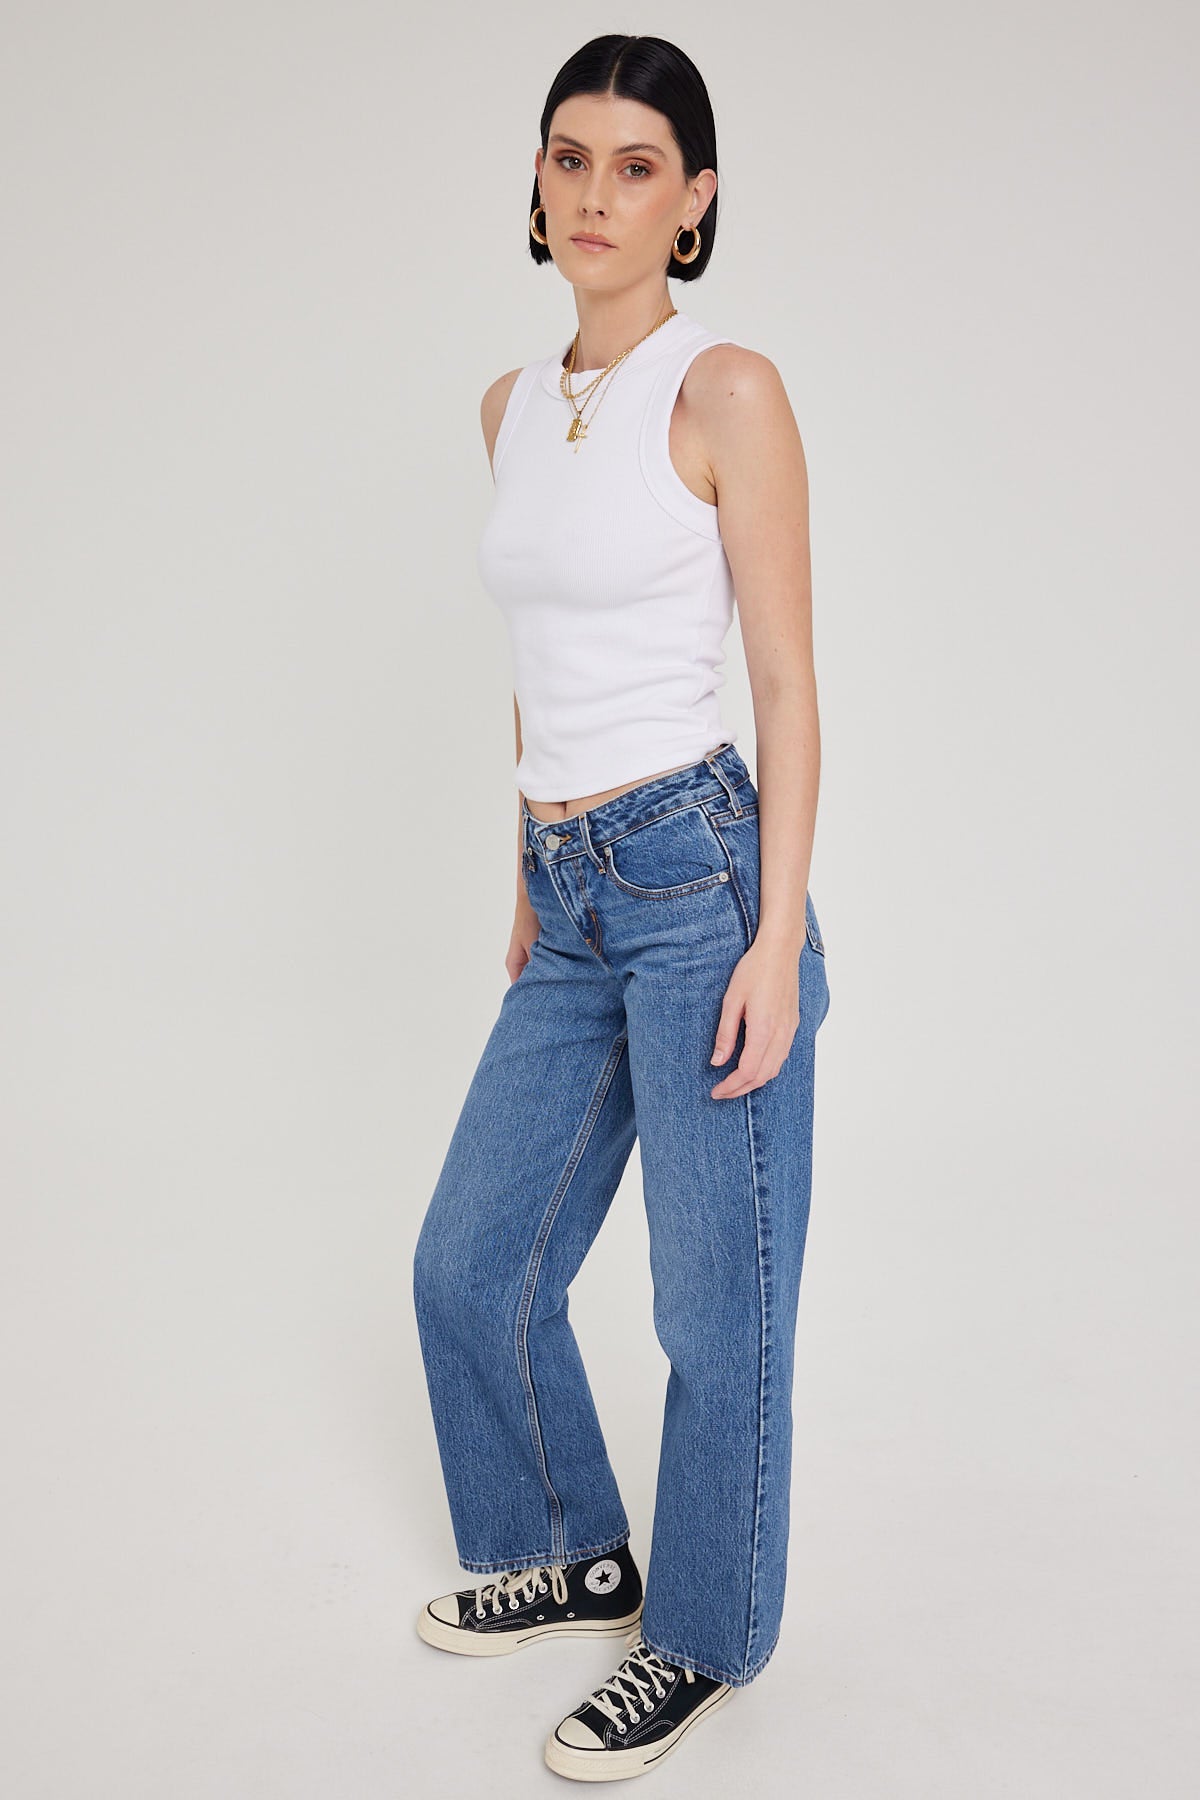 Tee Coastal – TJW Baby Serif Tommy Short Green Linear Jeans Universal Store Sleeve